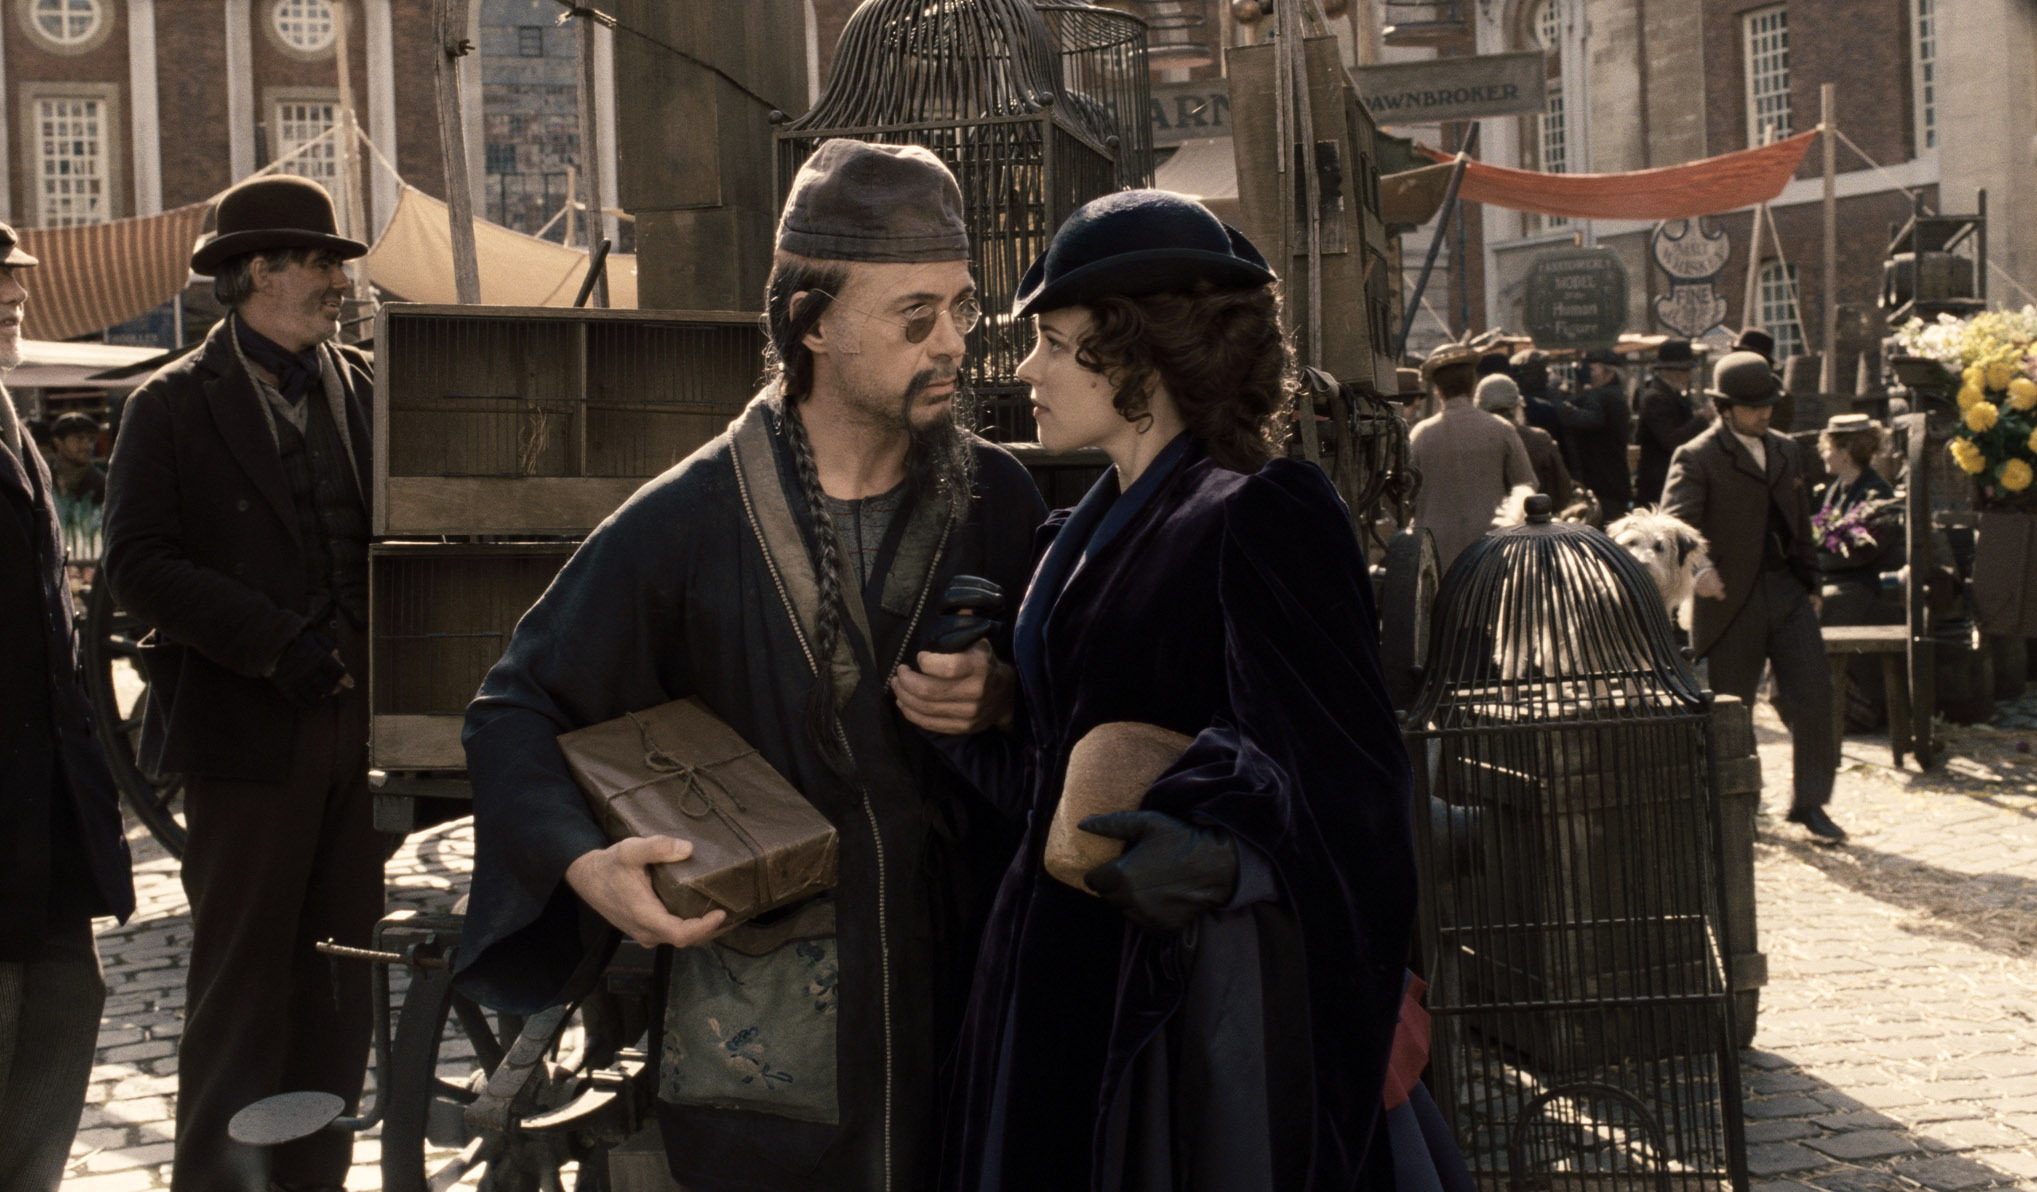 Still of Robert Downey Jr. and Rachel McAdams in Serlokas Holmsas: Seseliu zaidimas (2011)